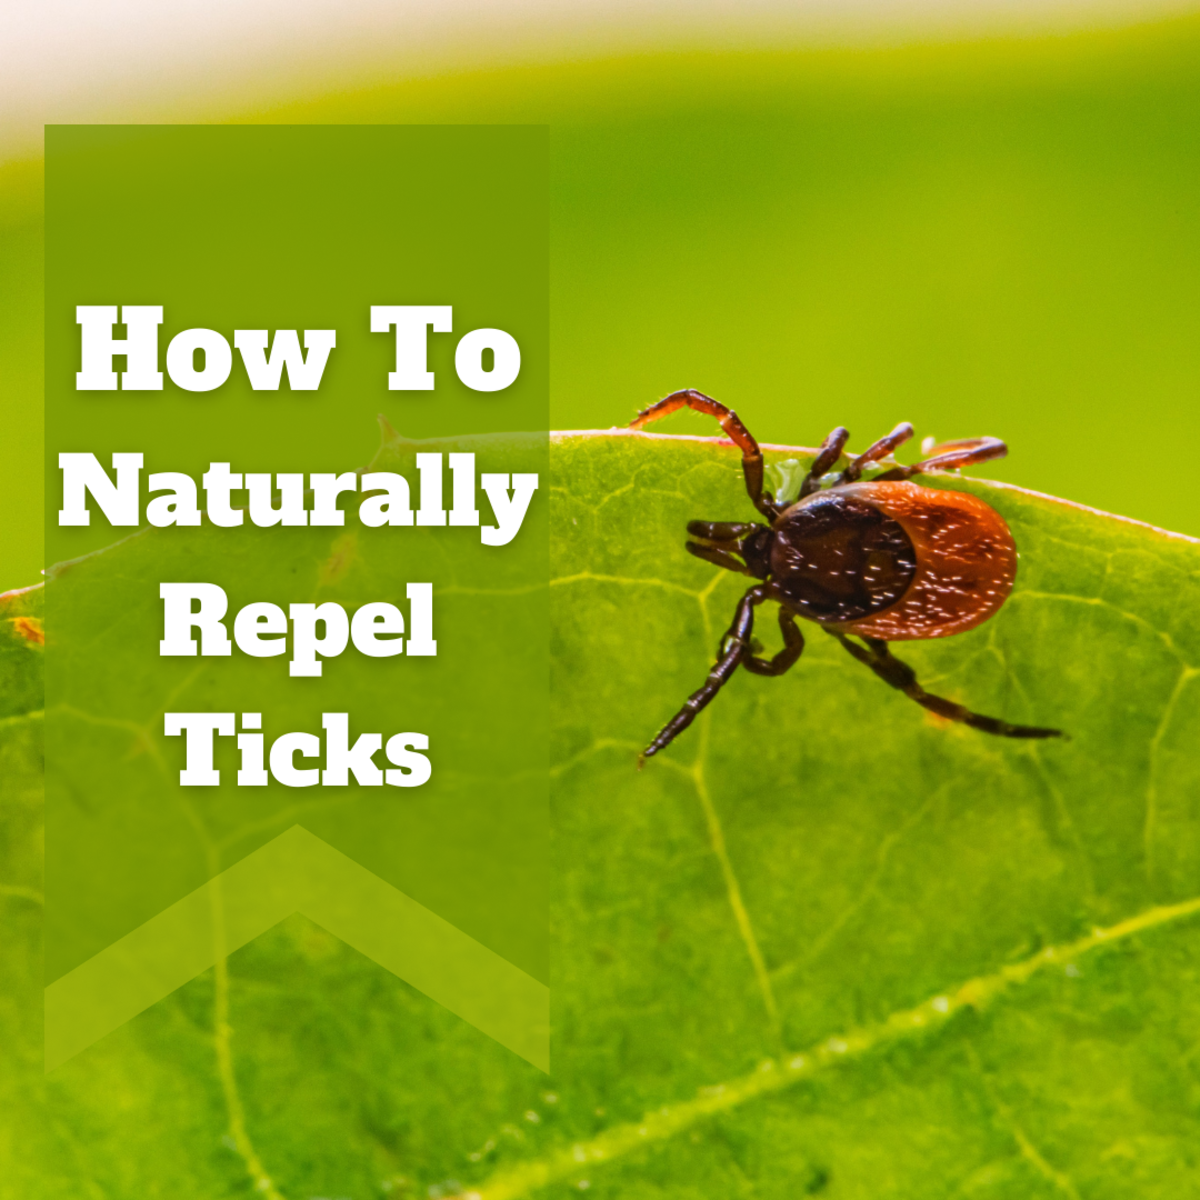 How to Repel Ticks Naturally